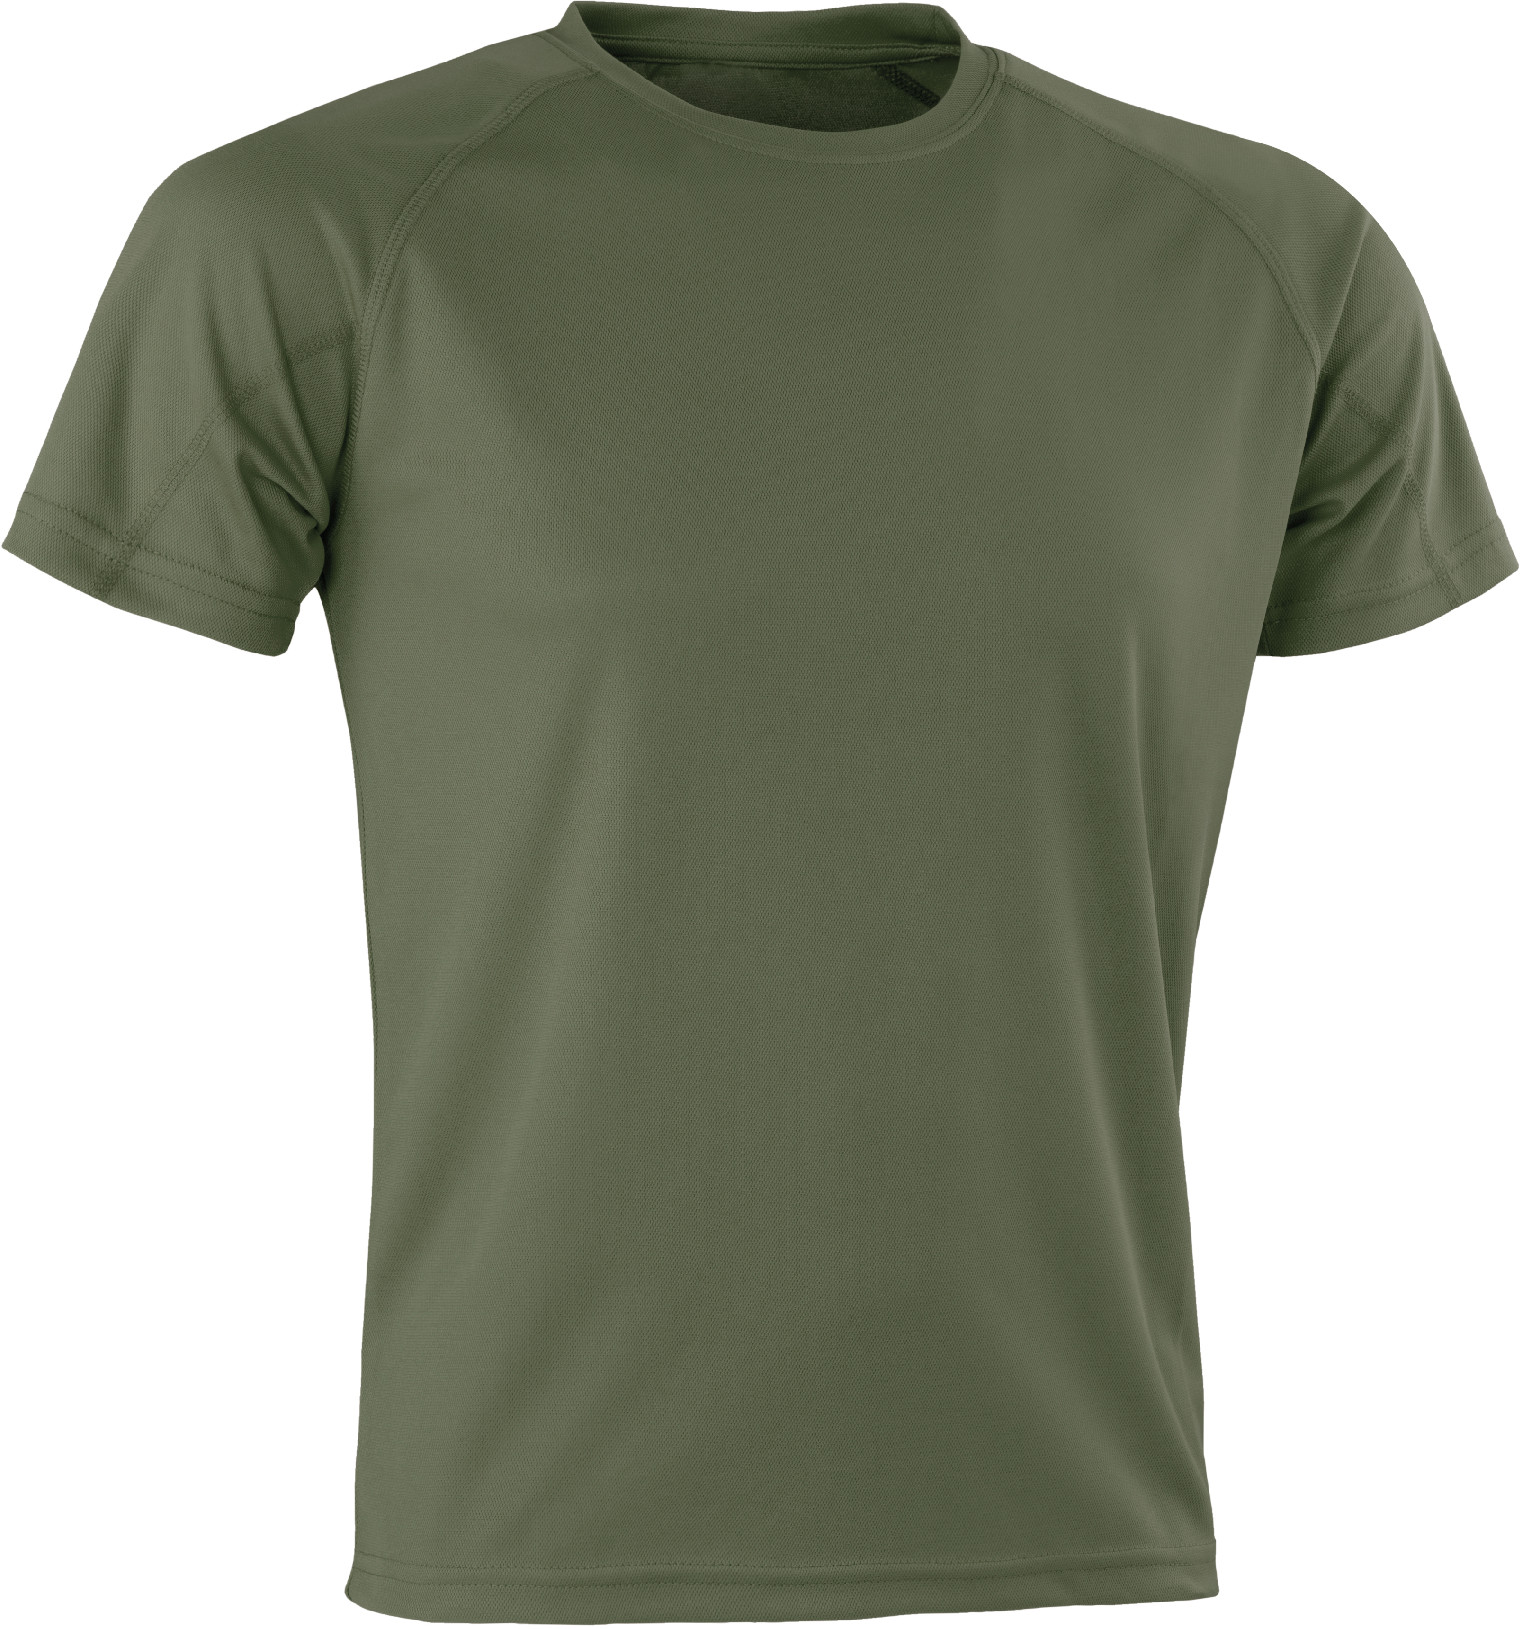 Sportovní tričko Aircool S287X Barva: khaki, Velikost: L